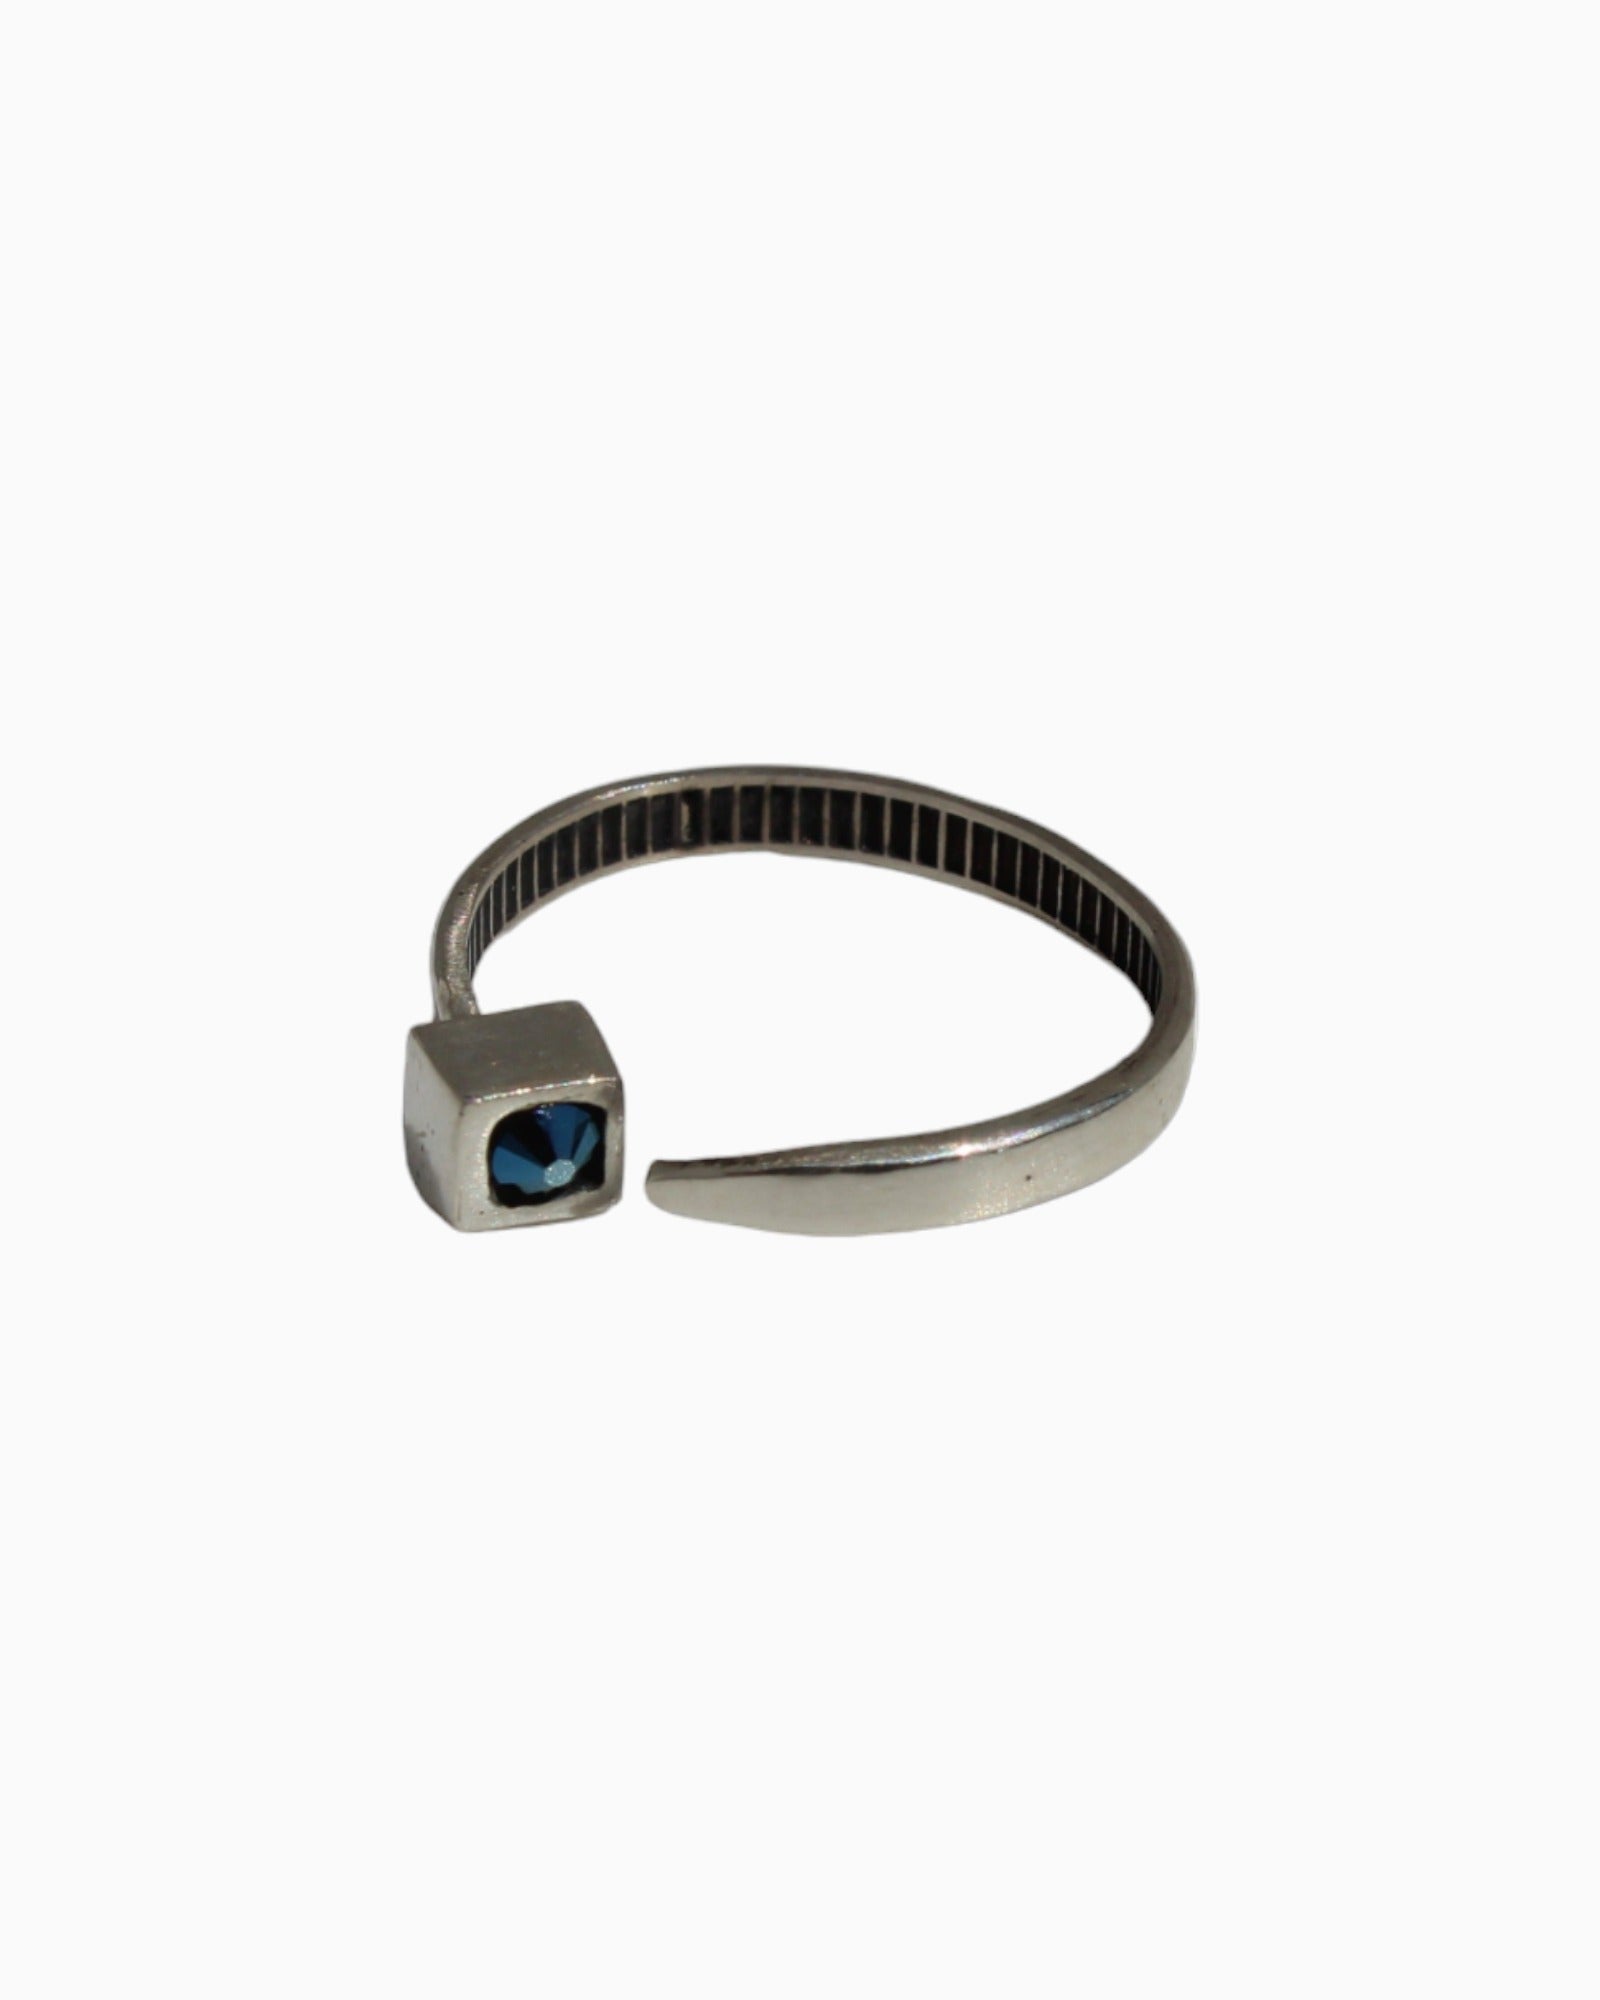 Handmade Silver Ring with blue Swarovski